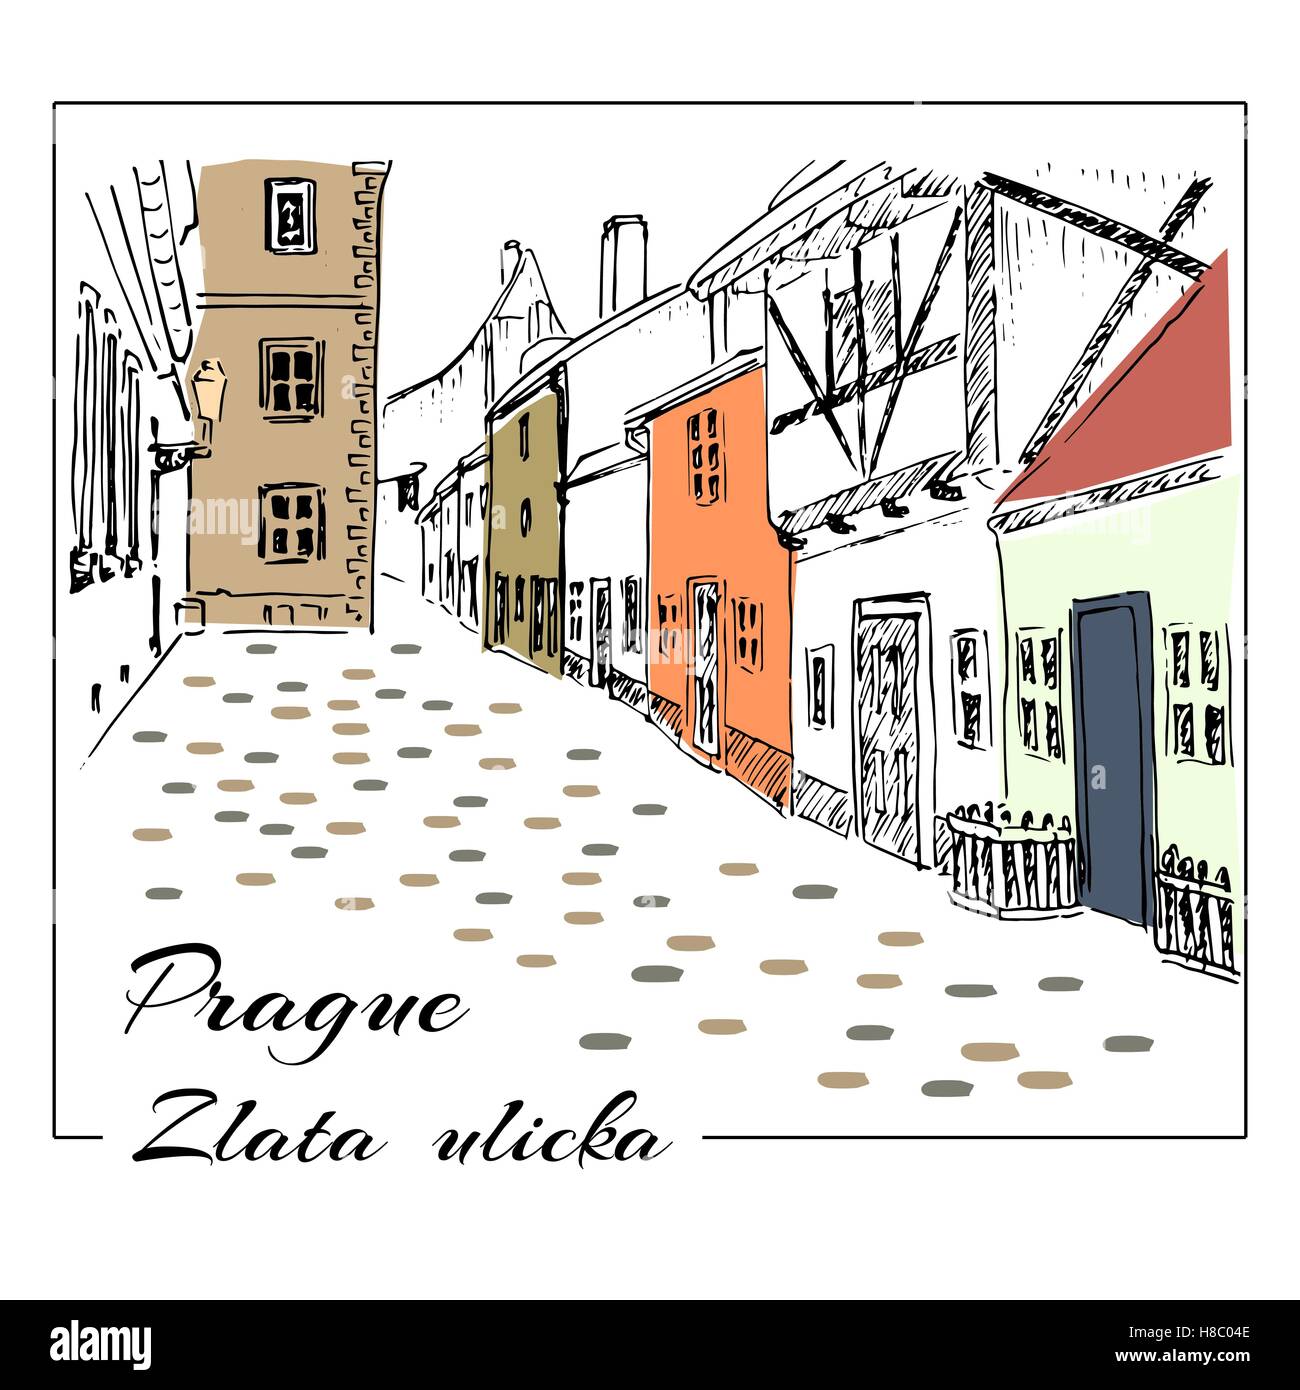 Prague. Colored hand drawn sketch illustration. Zlata ulicka - Golden street. Stock Vector